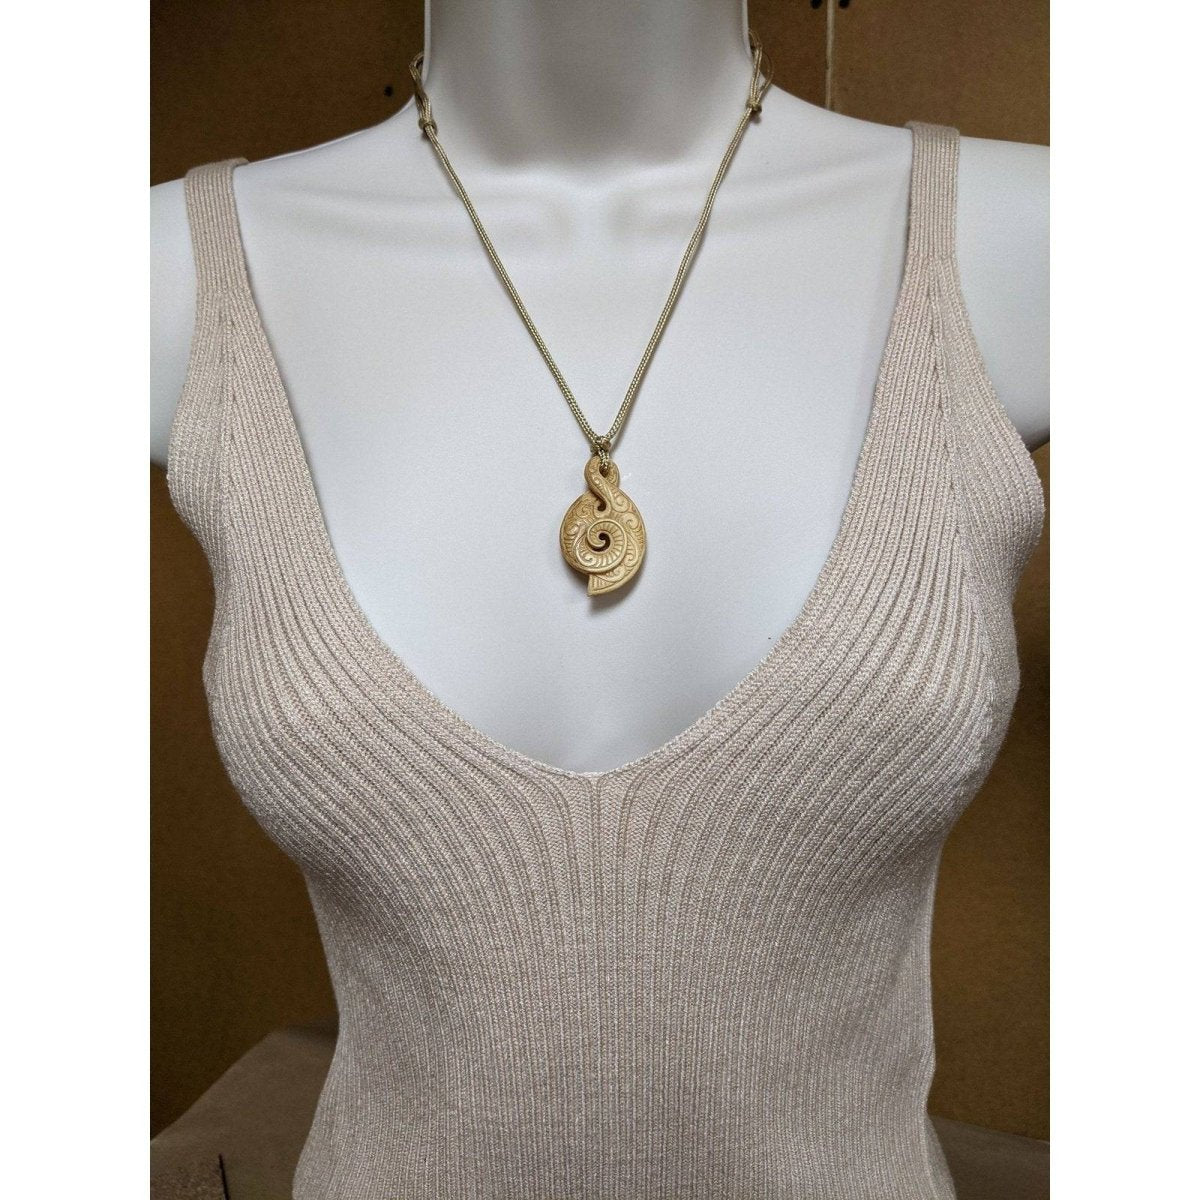 Buy 14k Koru Spiral Necklace, Personalized Maori Koru Pendant, Koru Spiral  Maori Symbol Pendant Online in India - Etsy